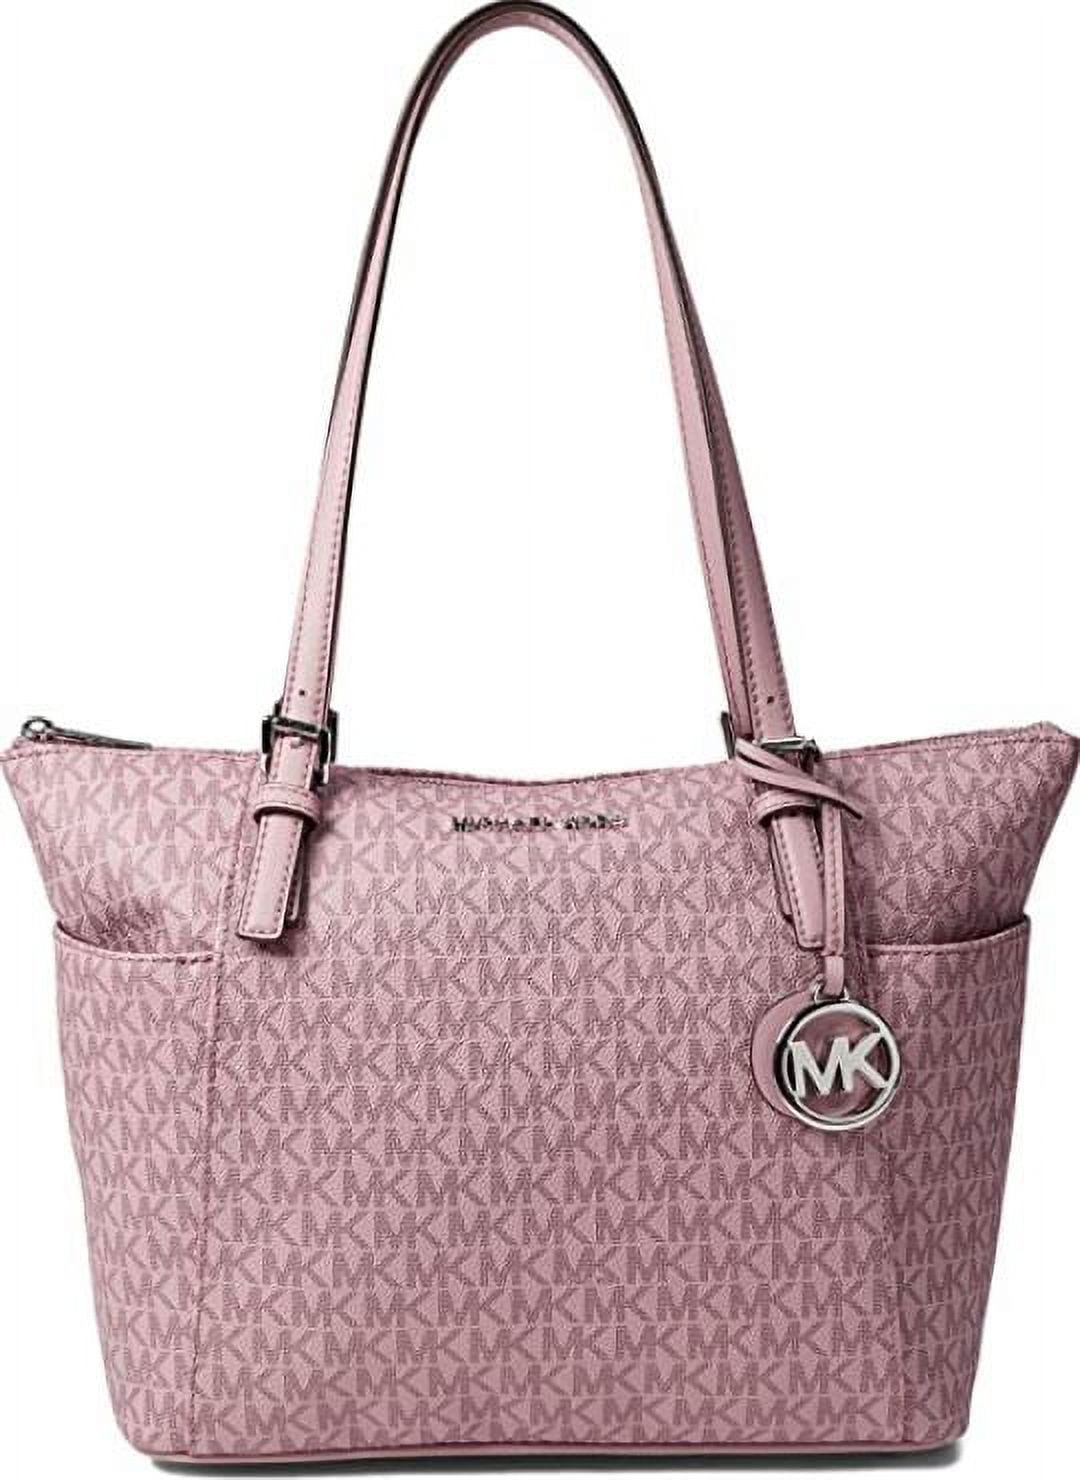 NWT Michael Kors Jet Set Large Top Zip Tote Two Tone Pink Handbag NEW  RELEASE!